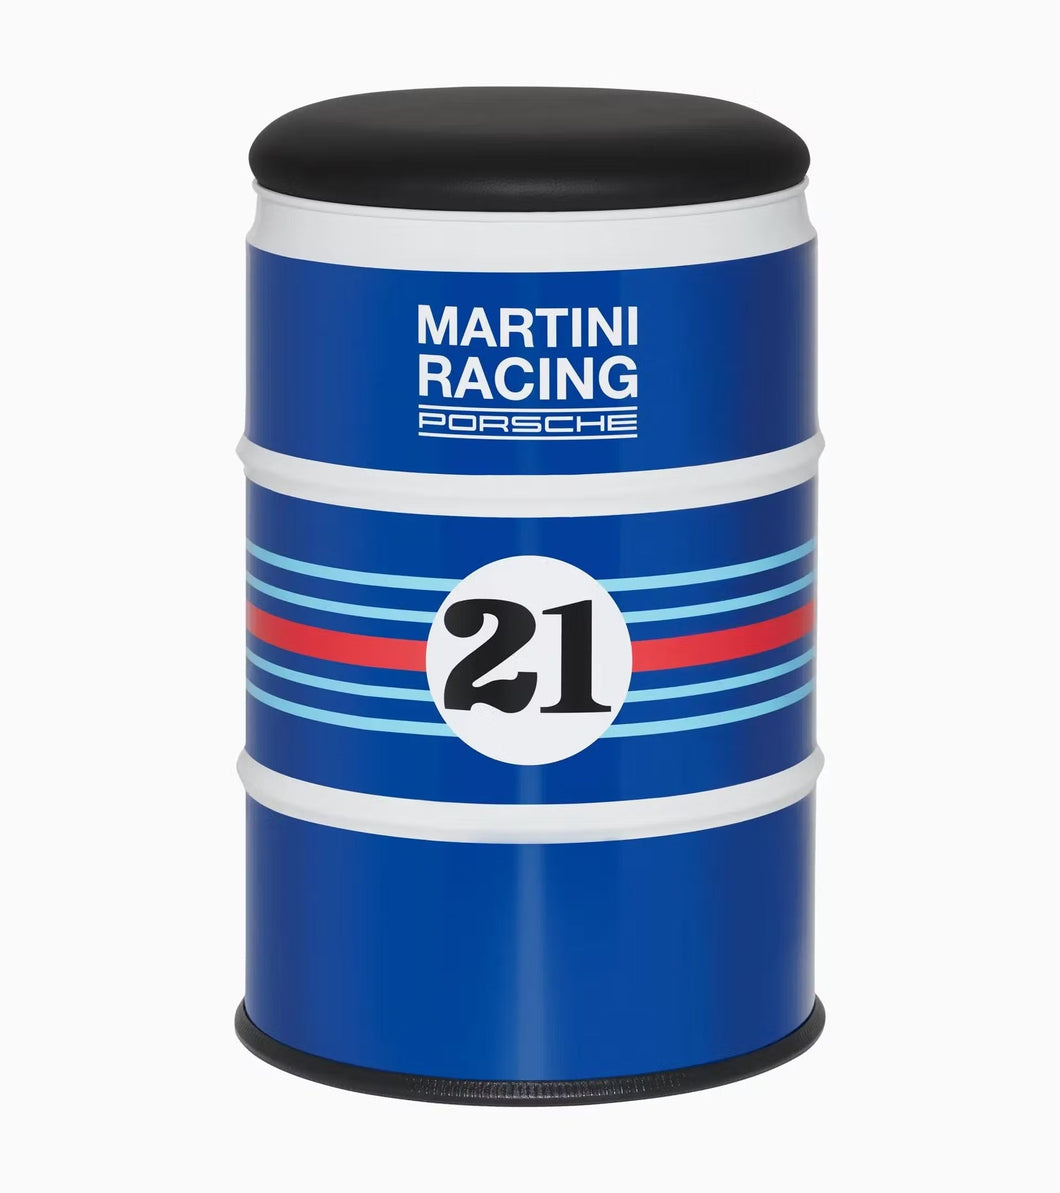 Oil drum seat – MARTINI RACING®